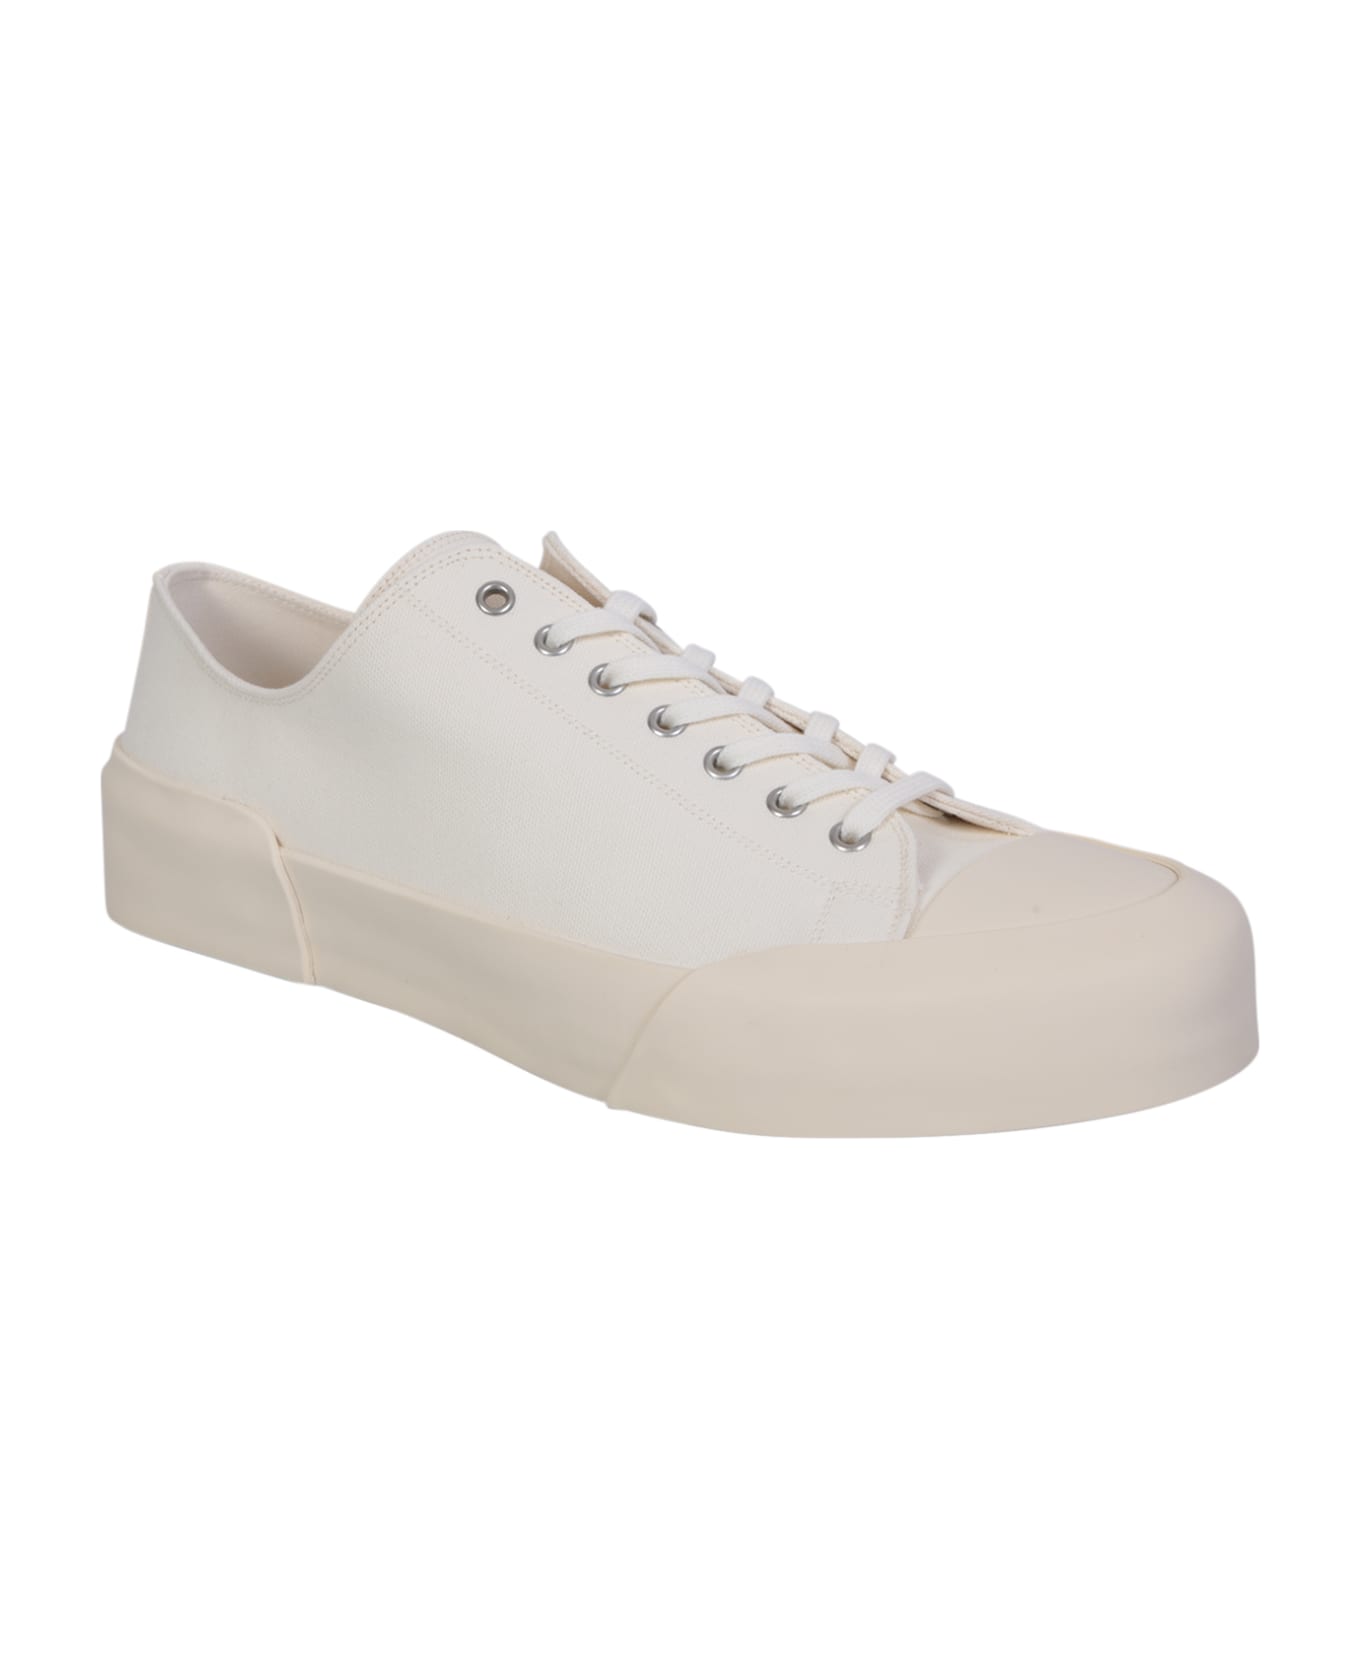 Jil Sander Lace-up Low White Sneakers - White